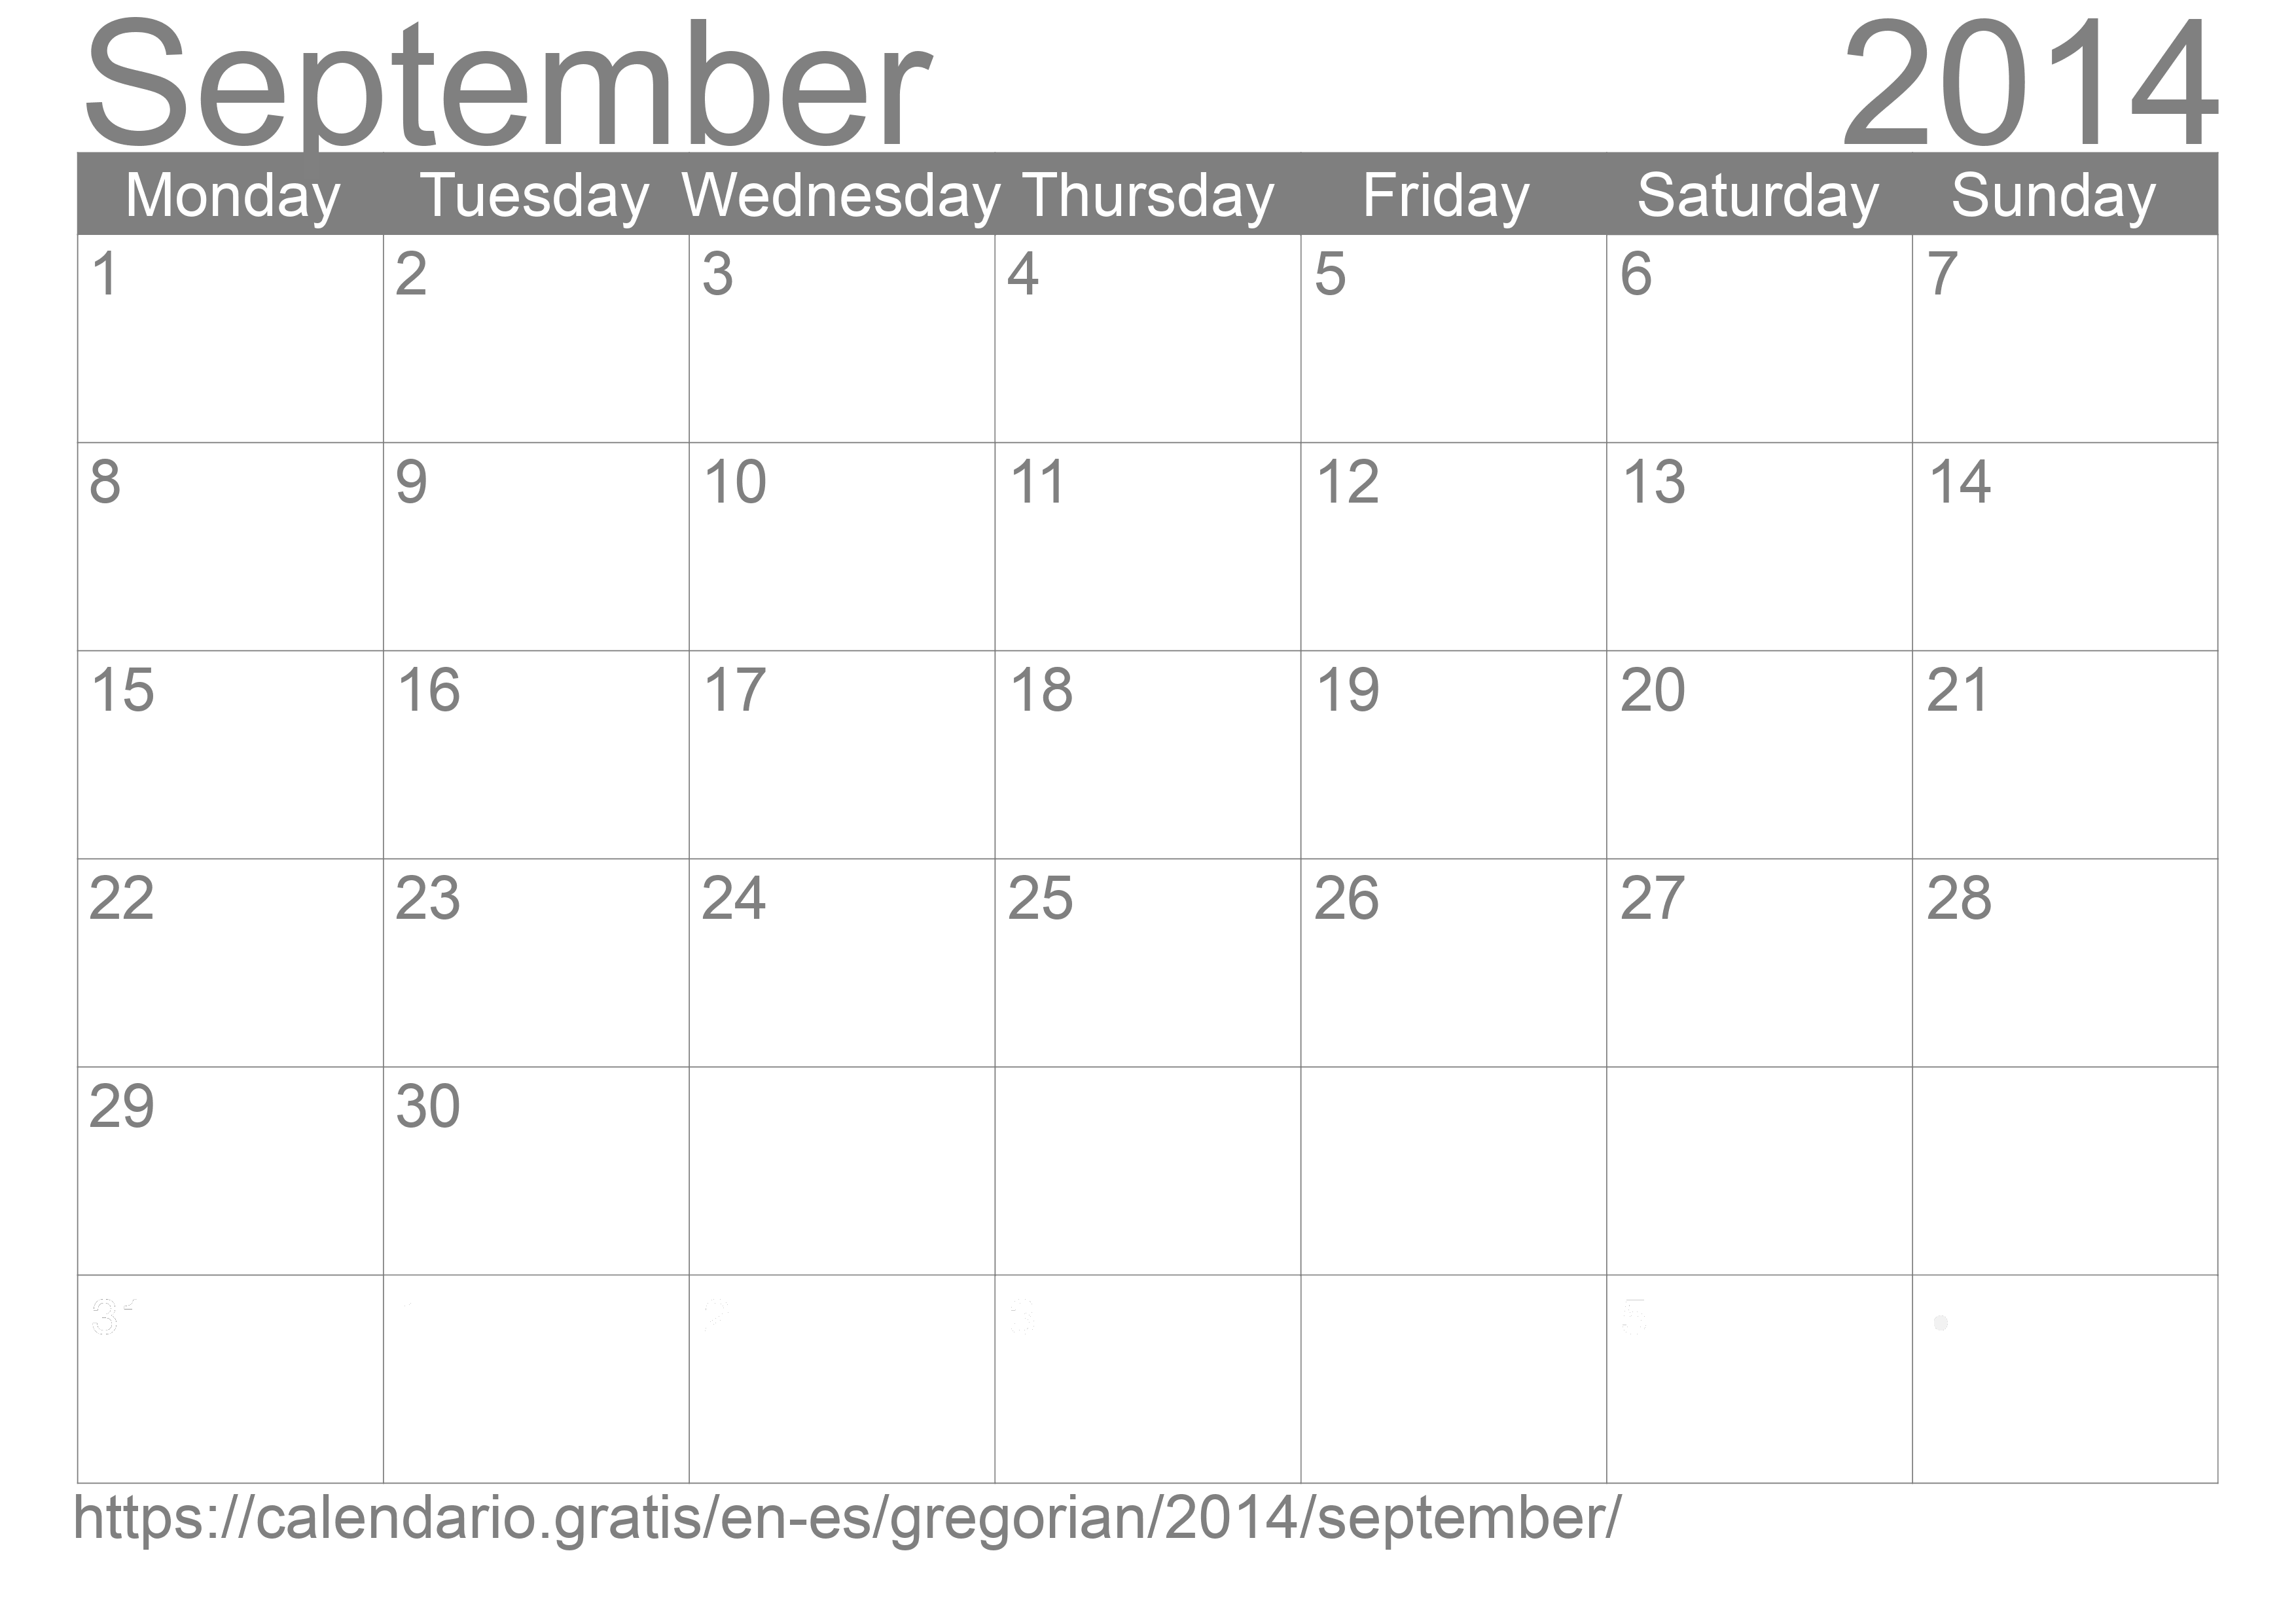 Calendar September 2014 to print